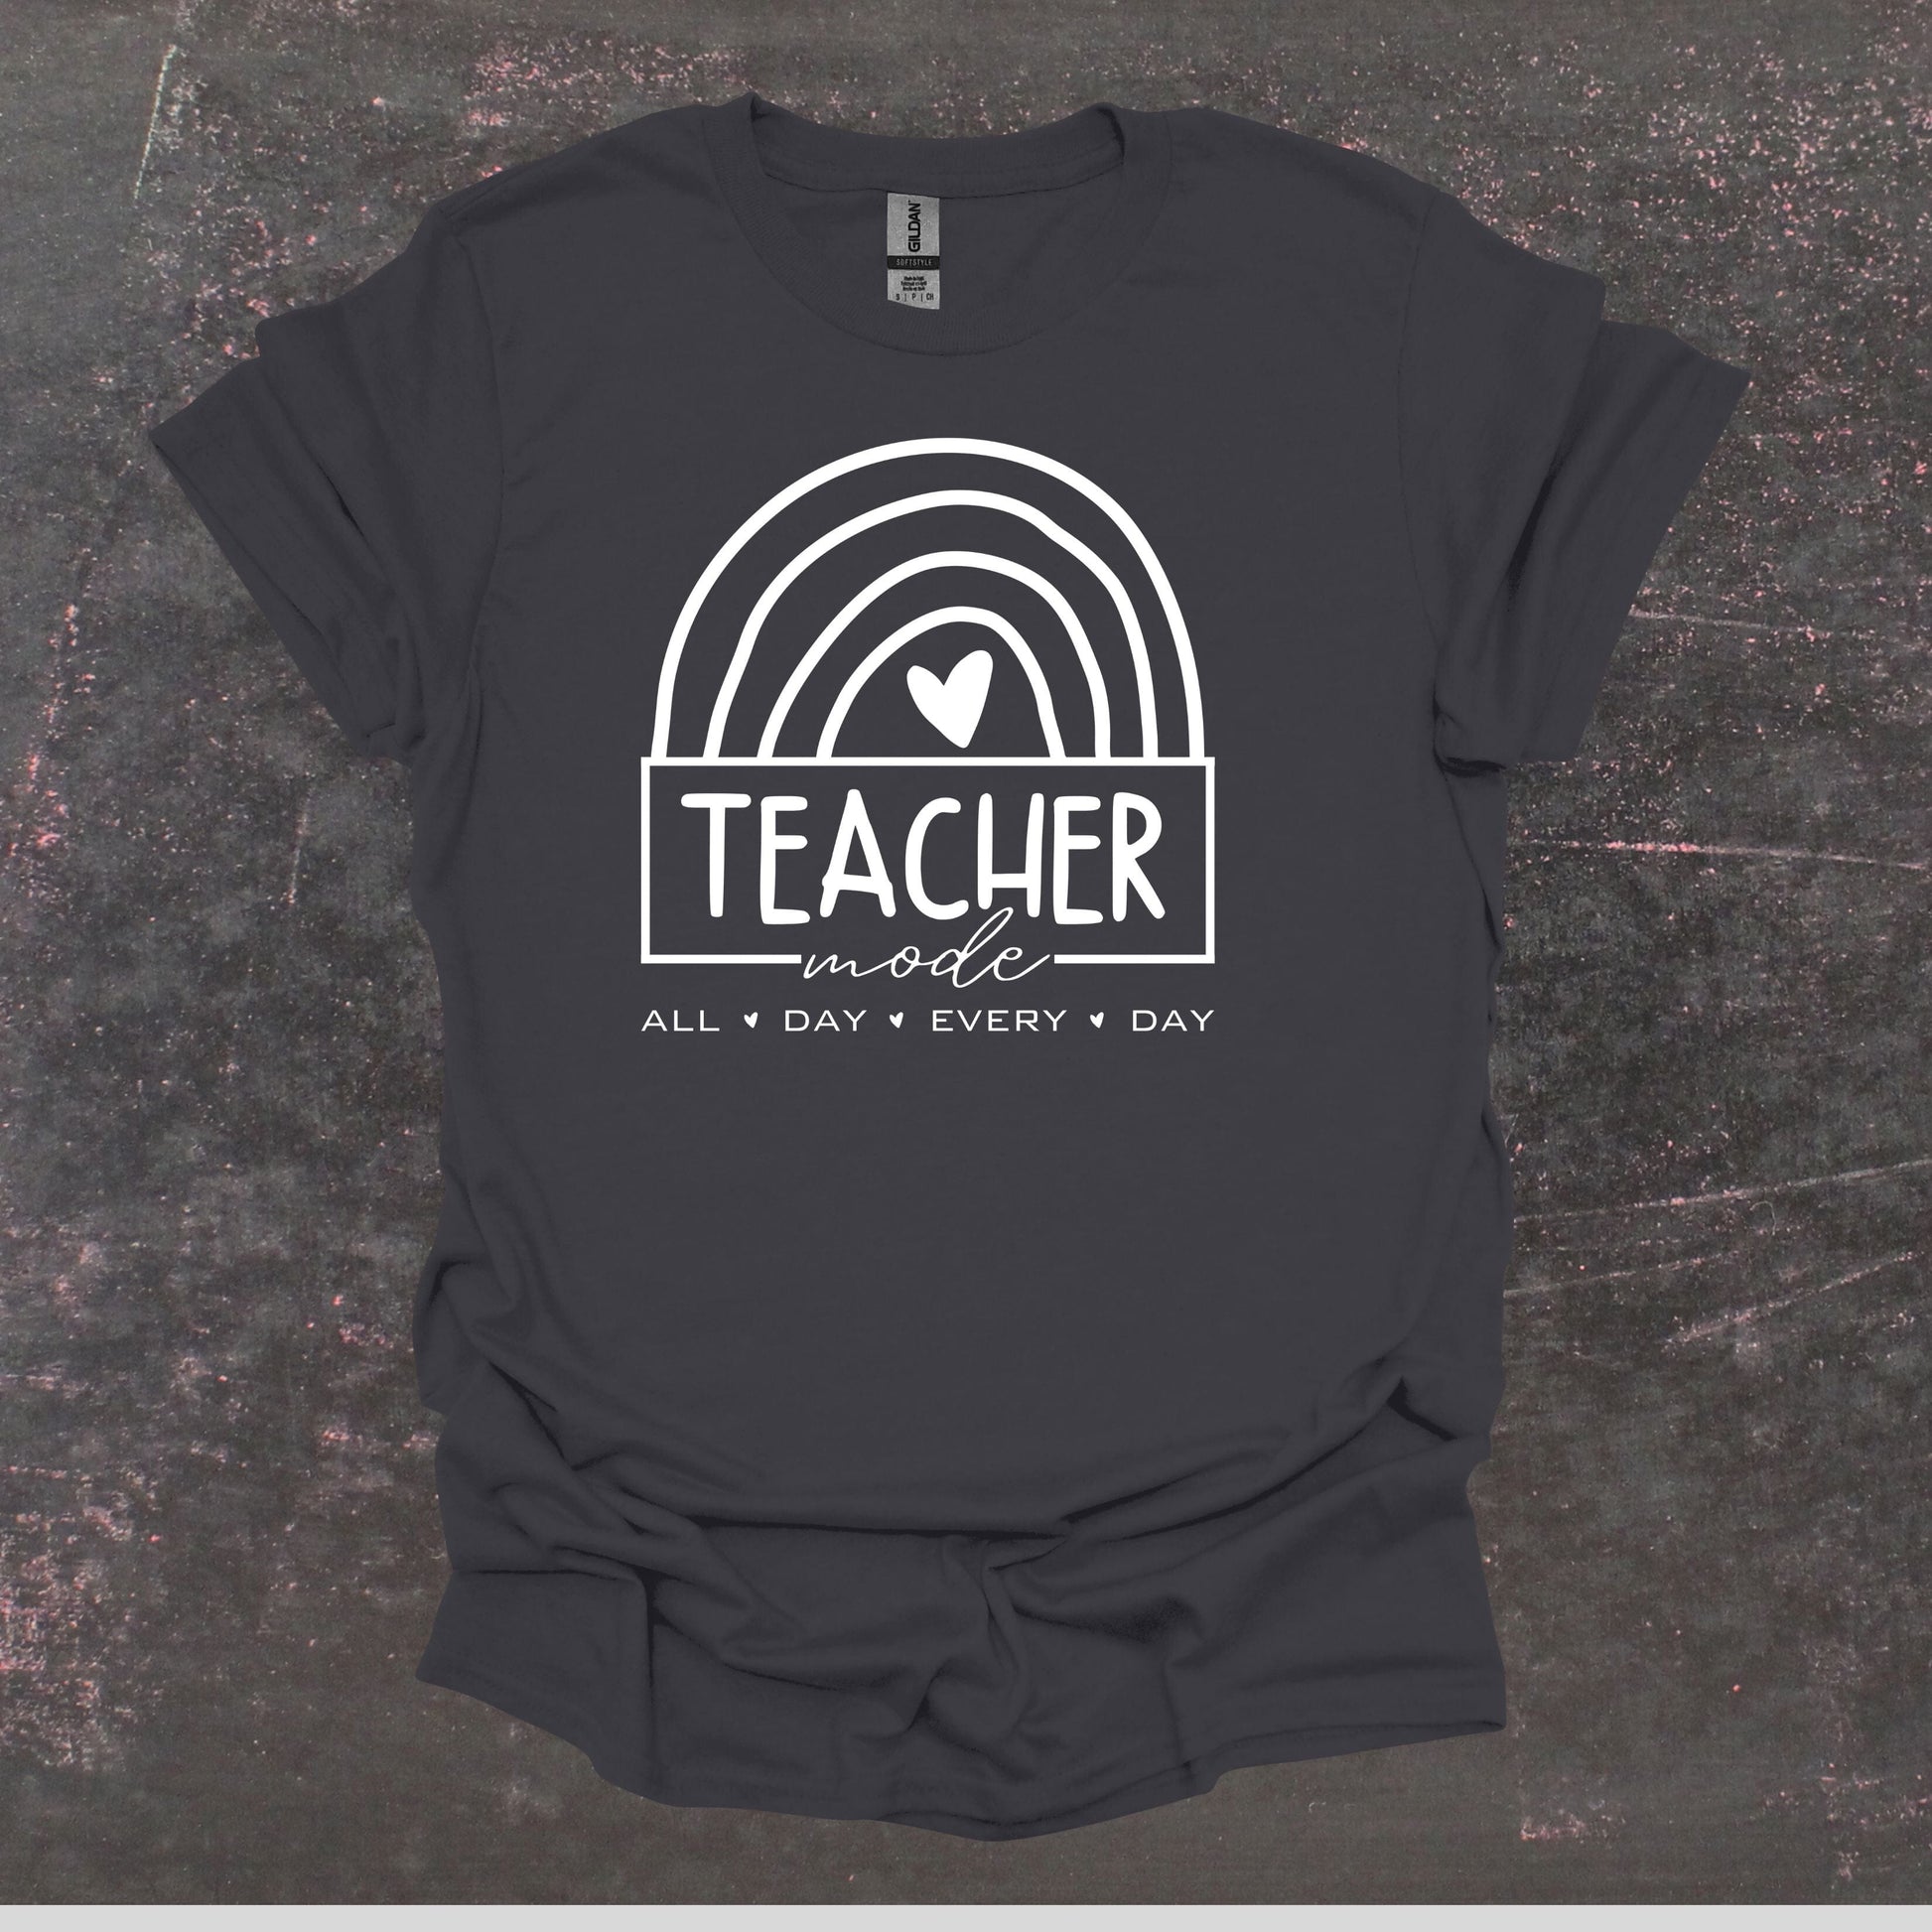 Teacher Mode - Teacher T Shirt - Adult Tee Shirts T-Shirts Graphic Avenue Charcoal Adult Small 